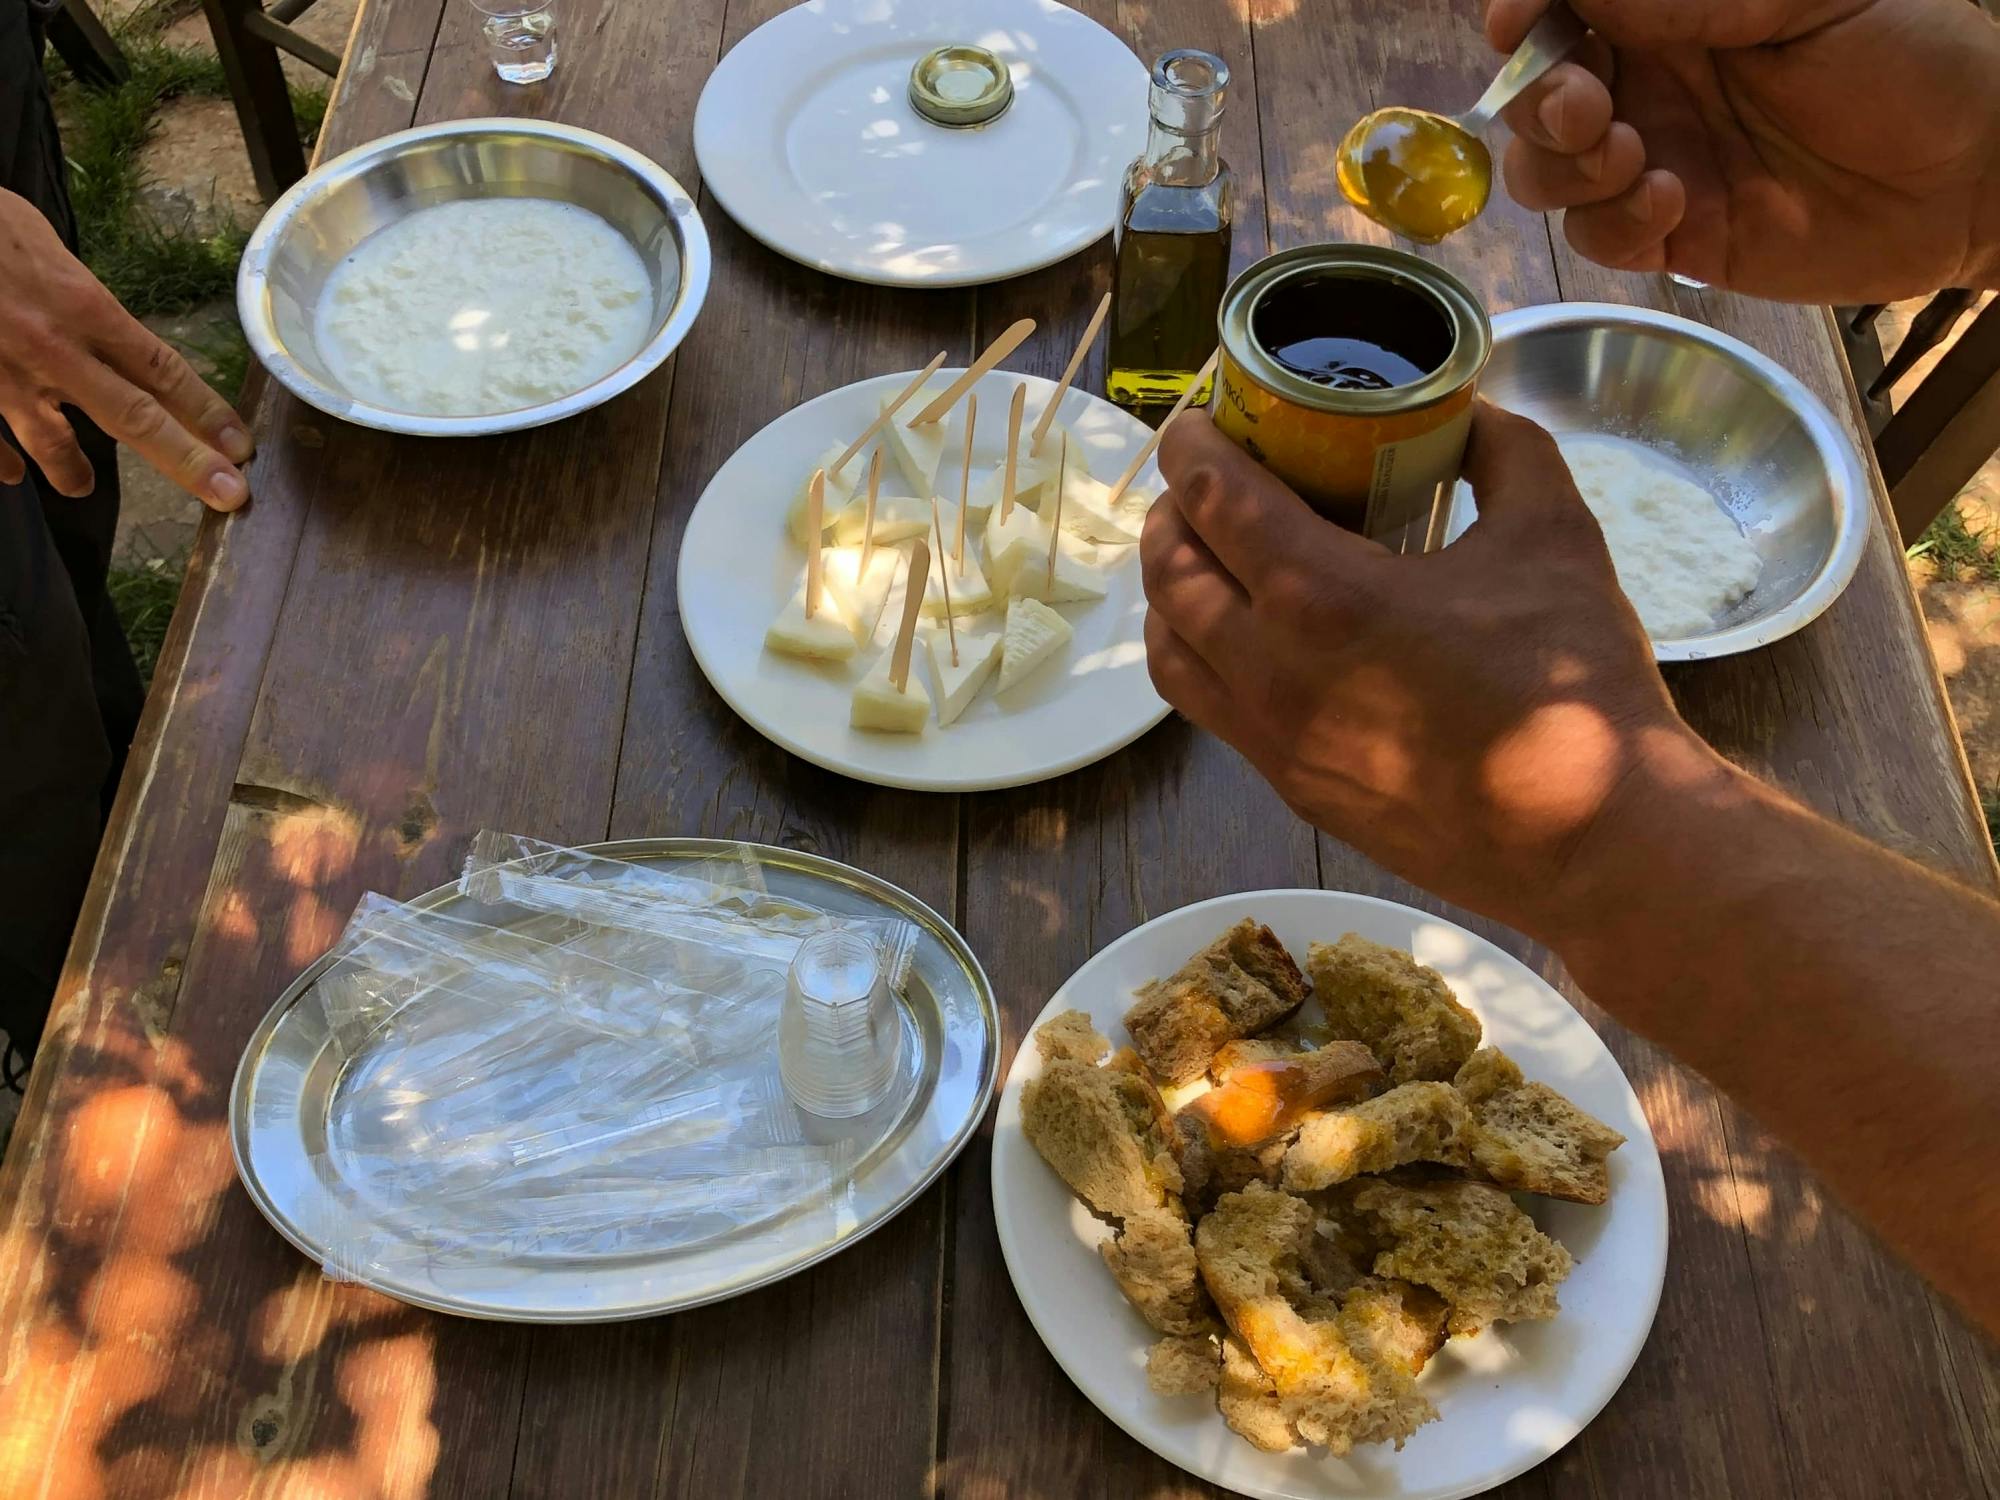 Crete 4x4 Mount Psiloritis Tour with Typical Meze Lunch